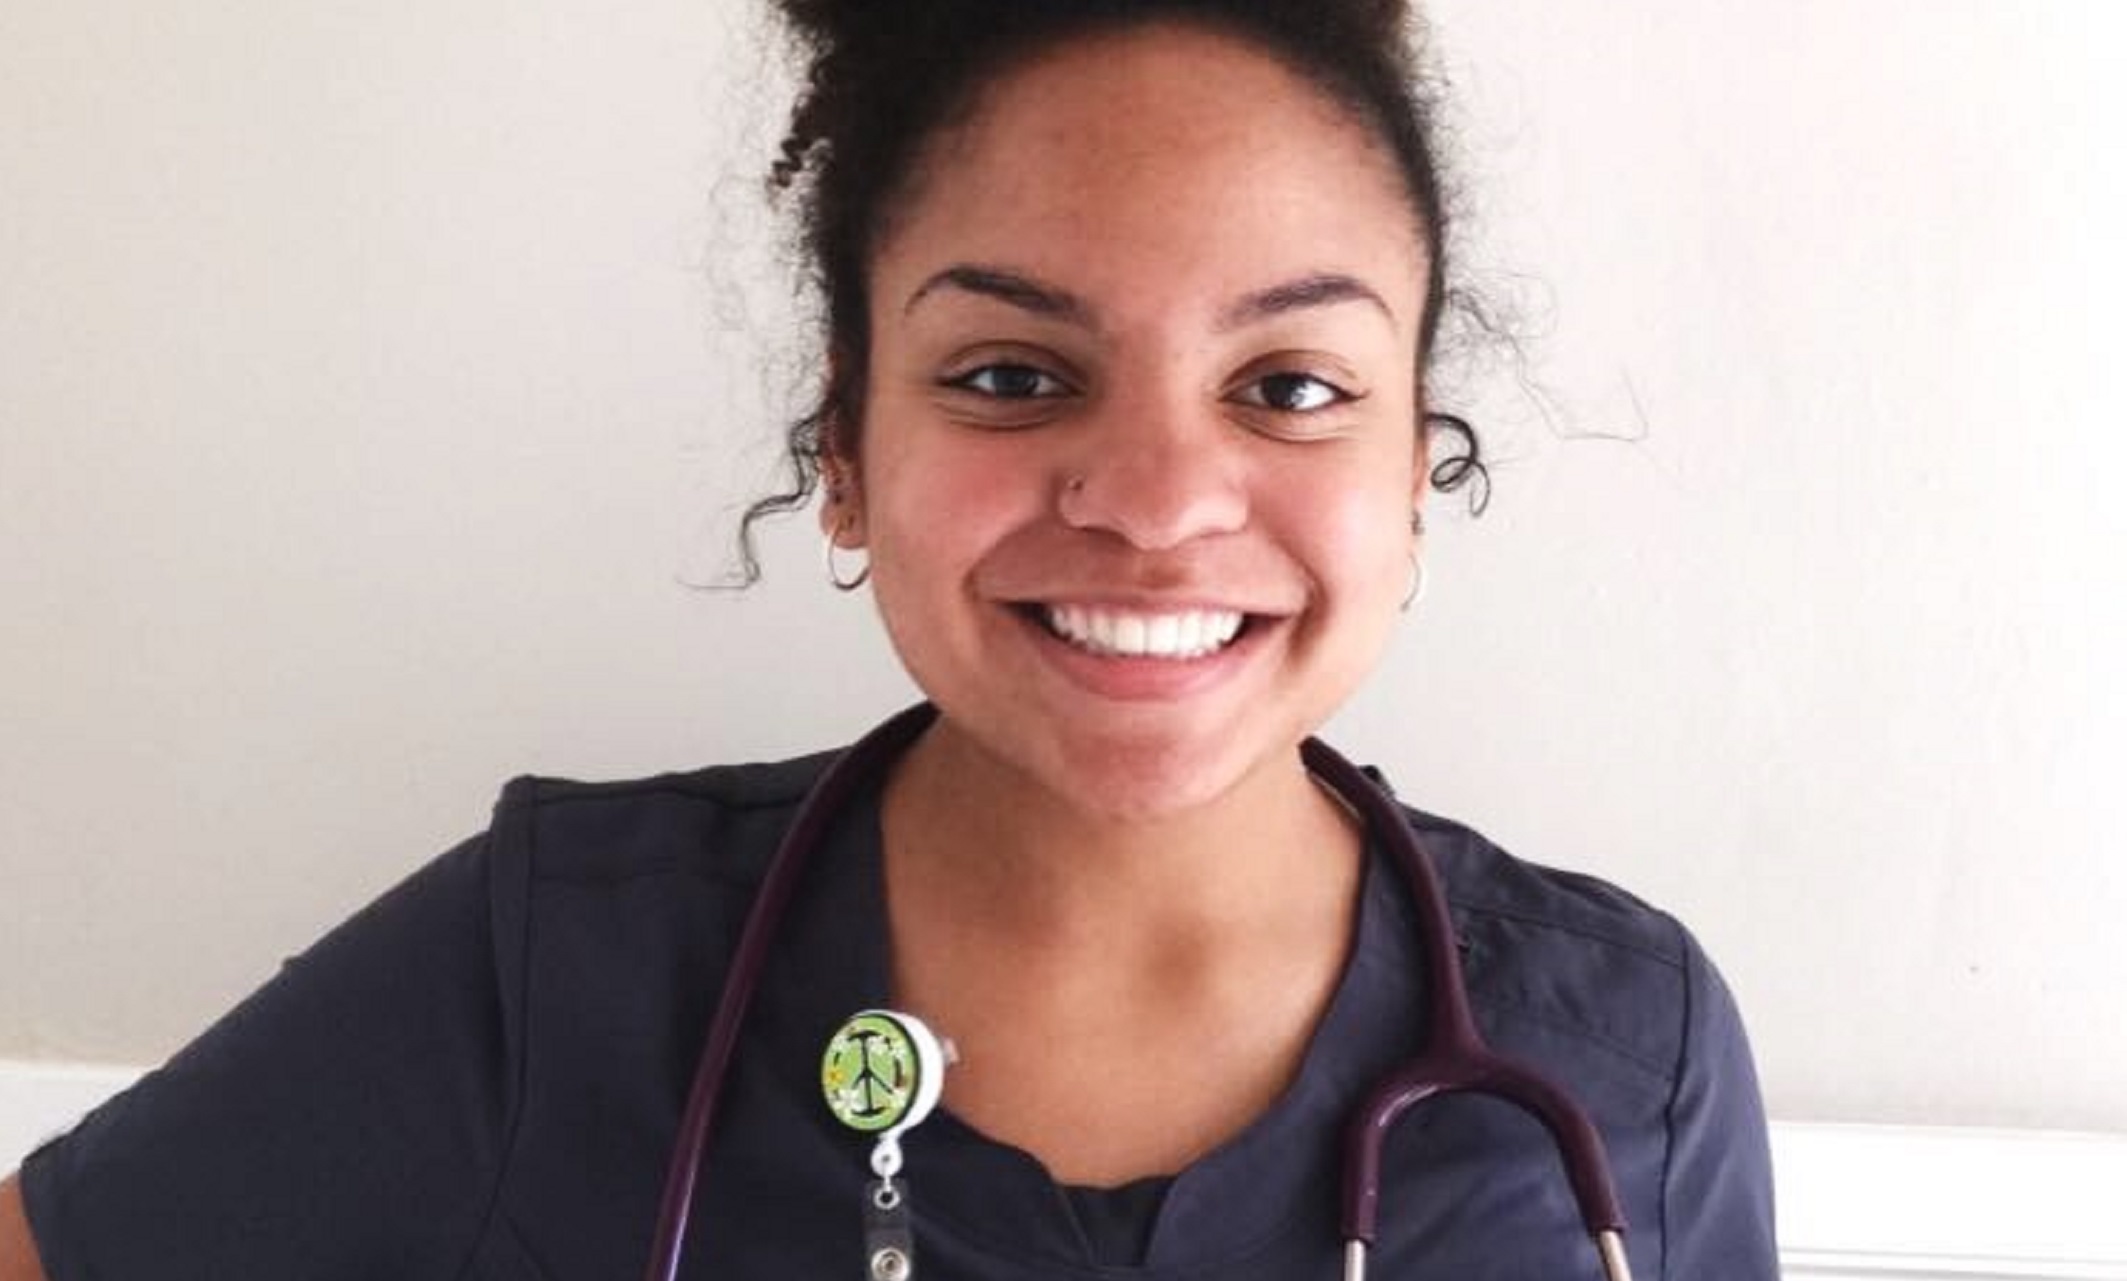 Nursing student Dominique Nichols